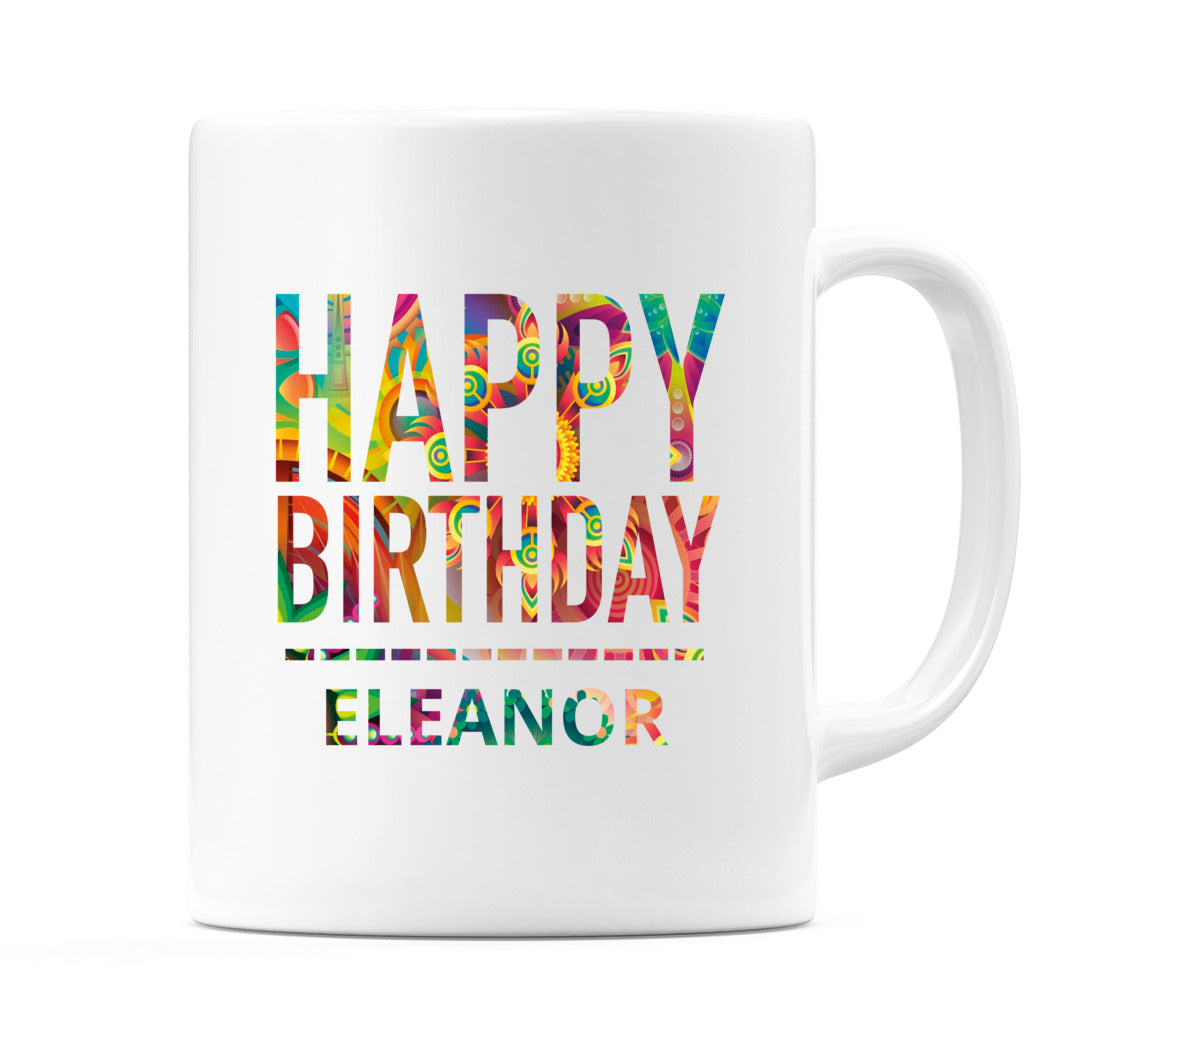 Happy Birthday Eleanor (Tie Dye Effect) Mug Cup by WeDoMugs